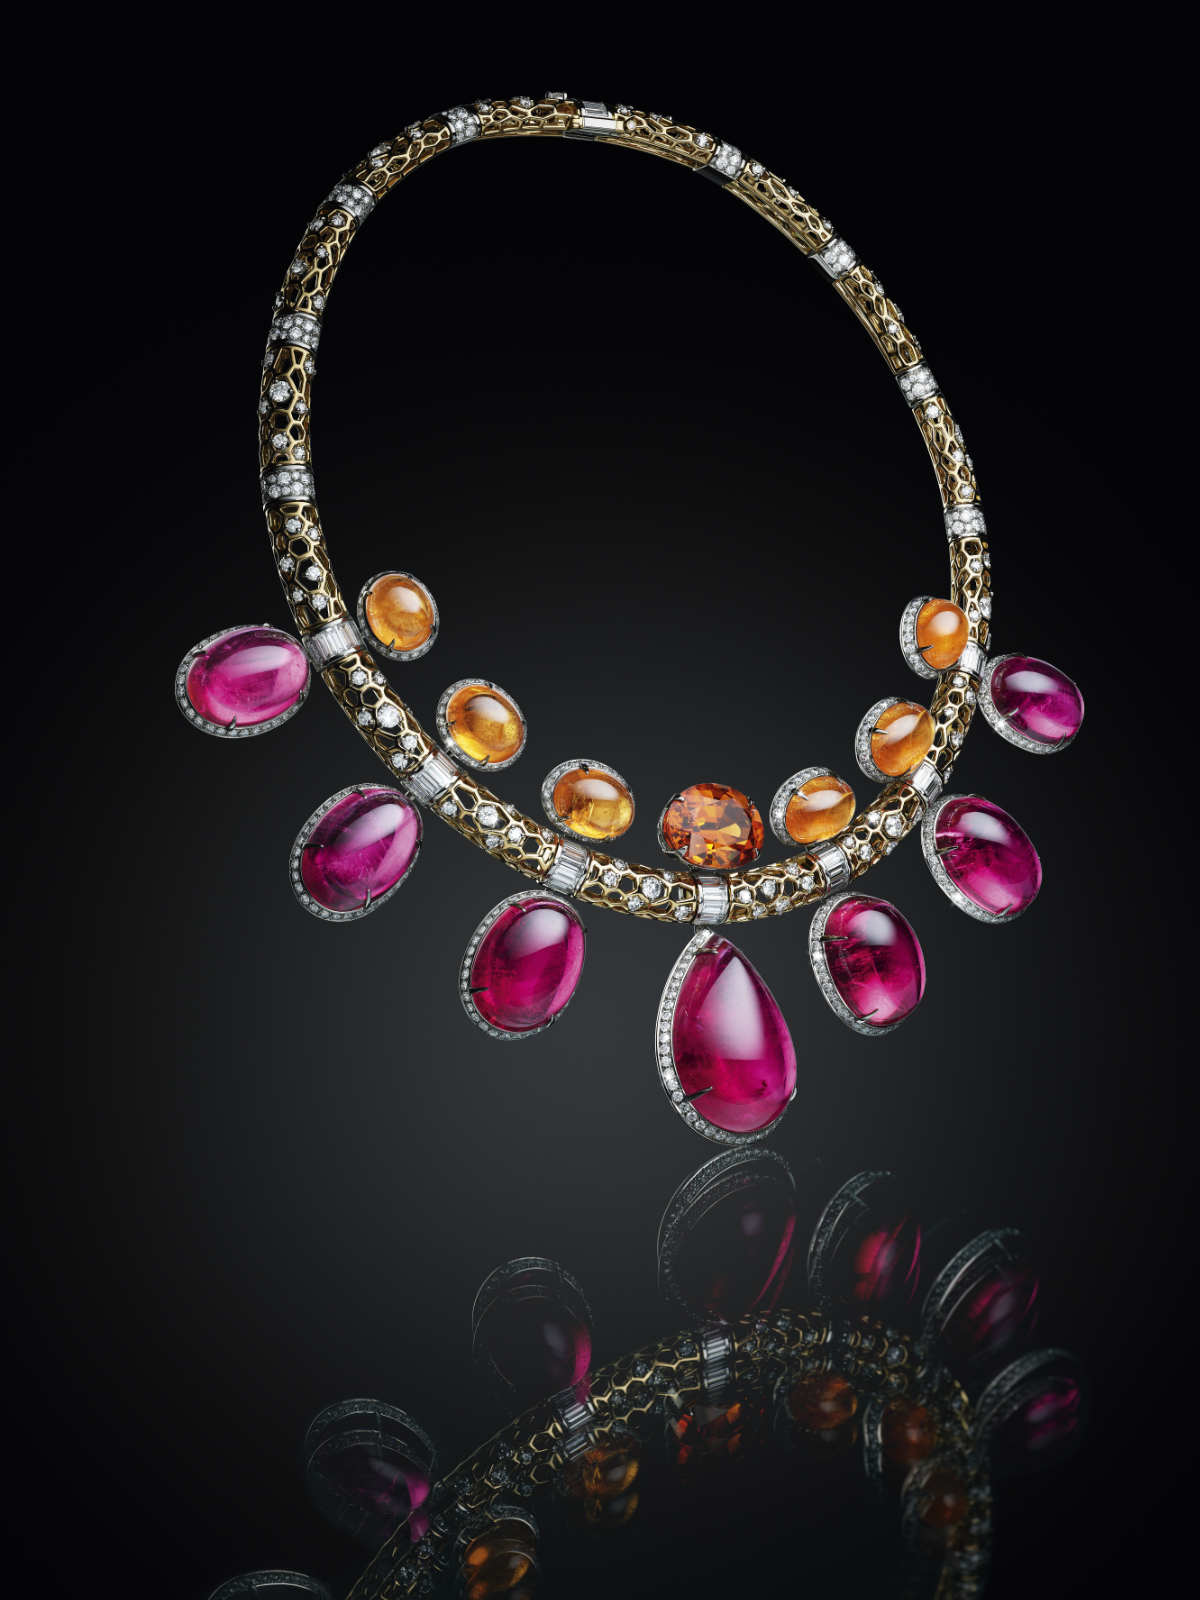 Seeds necklace by Louis Vuitton, Louis Vuitton